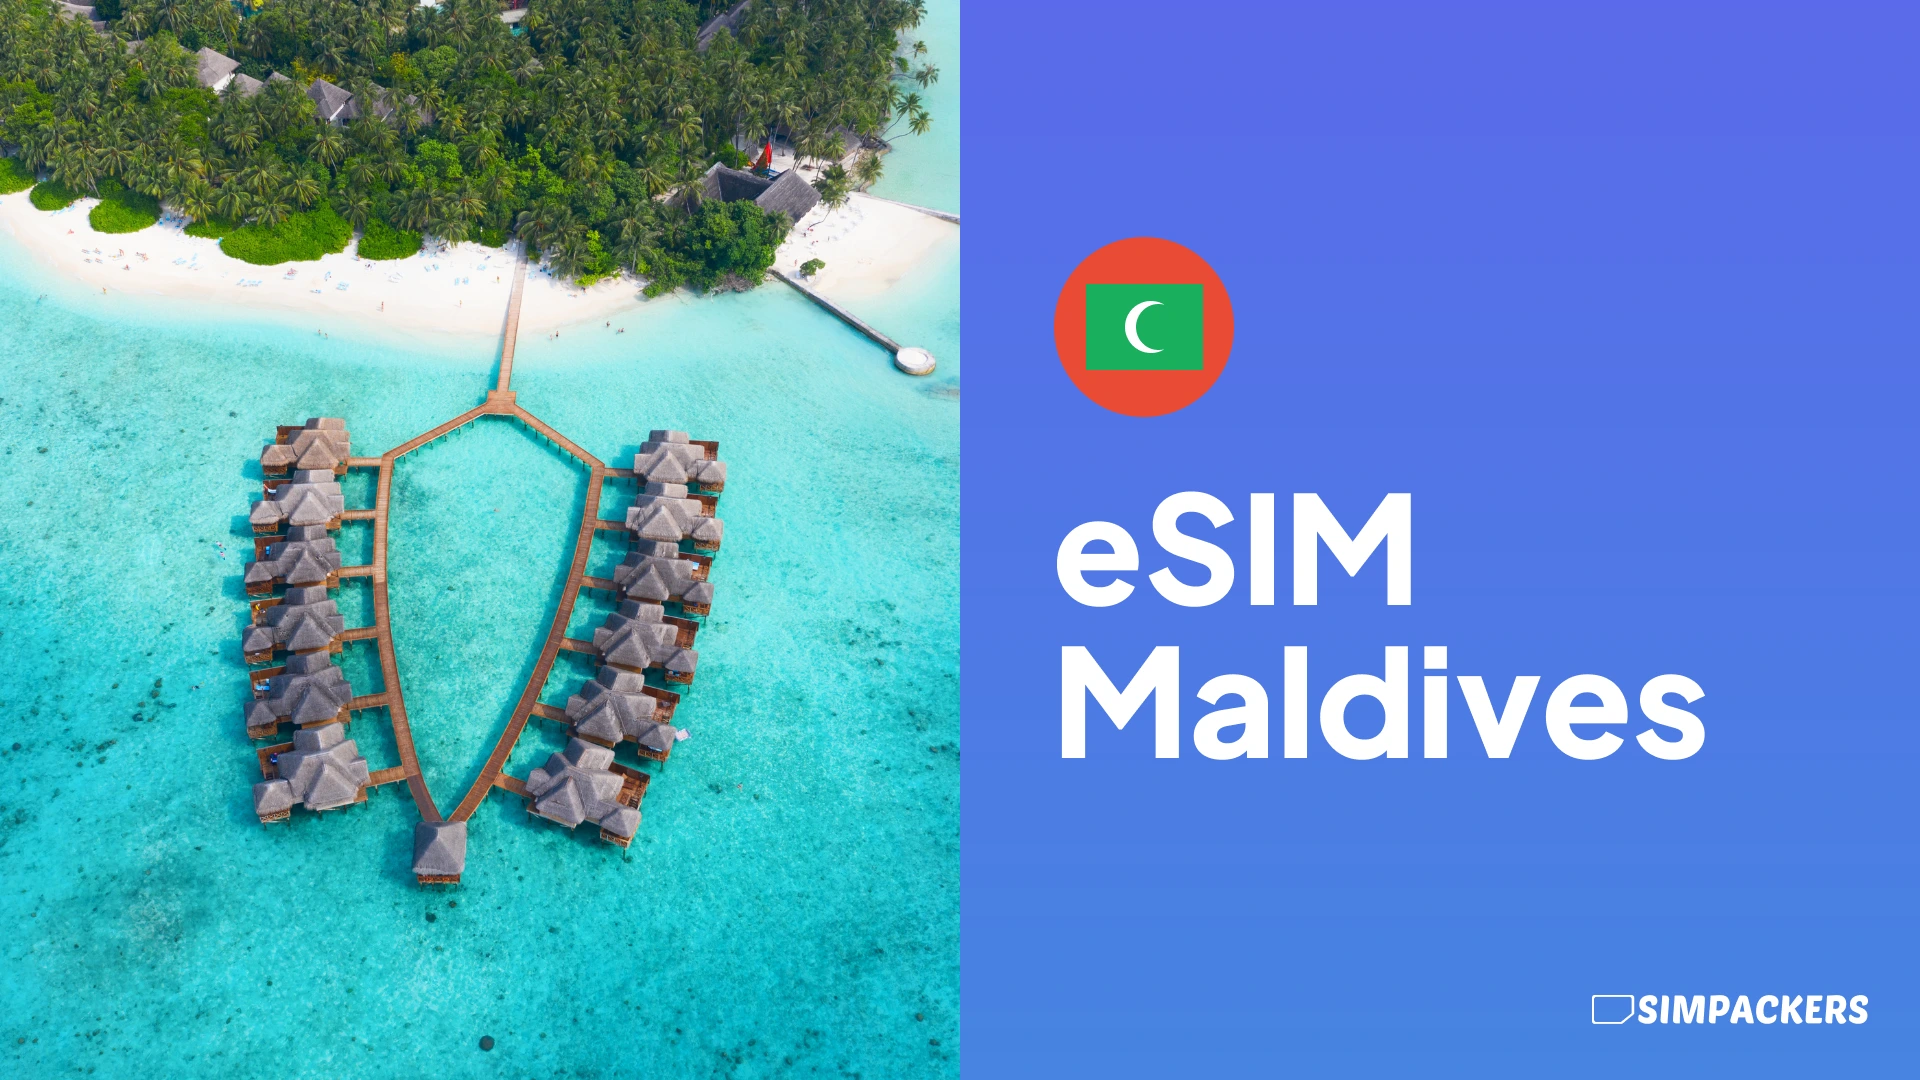 FR/FEATURED_IMAGES/esim-maldives.webp